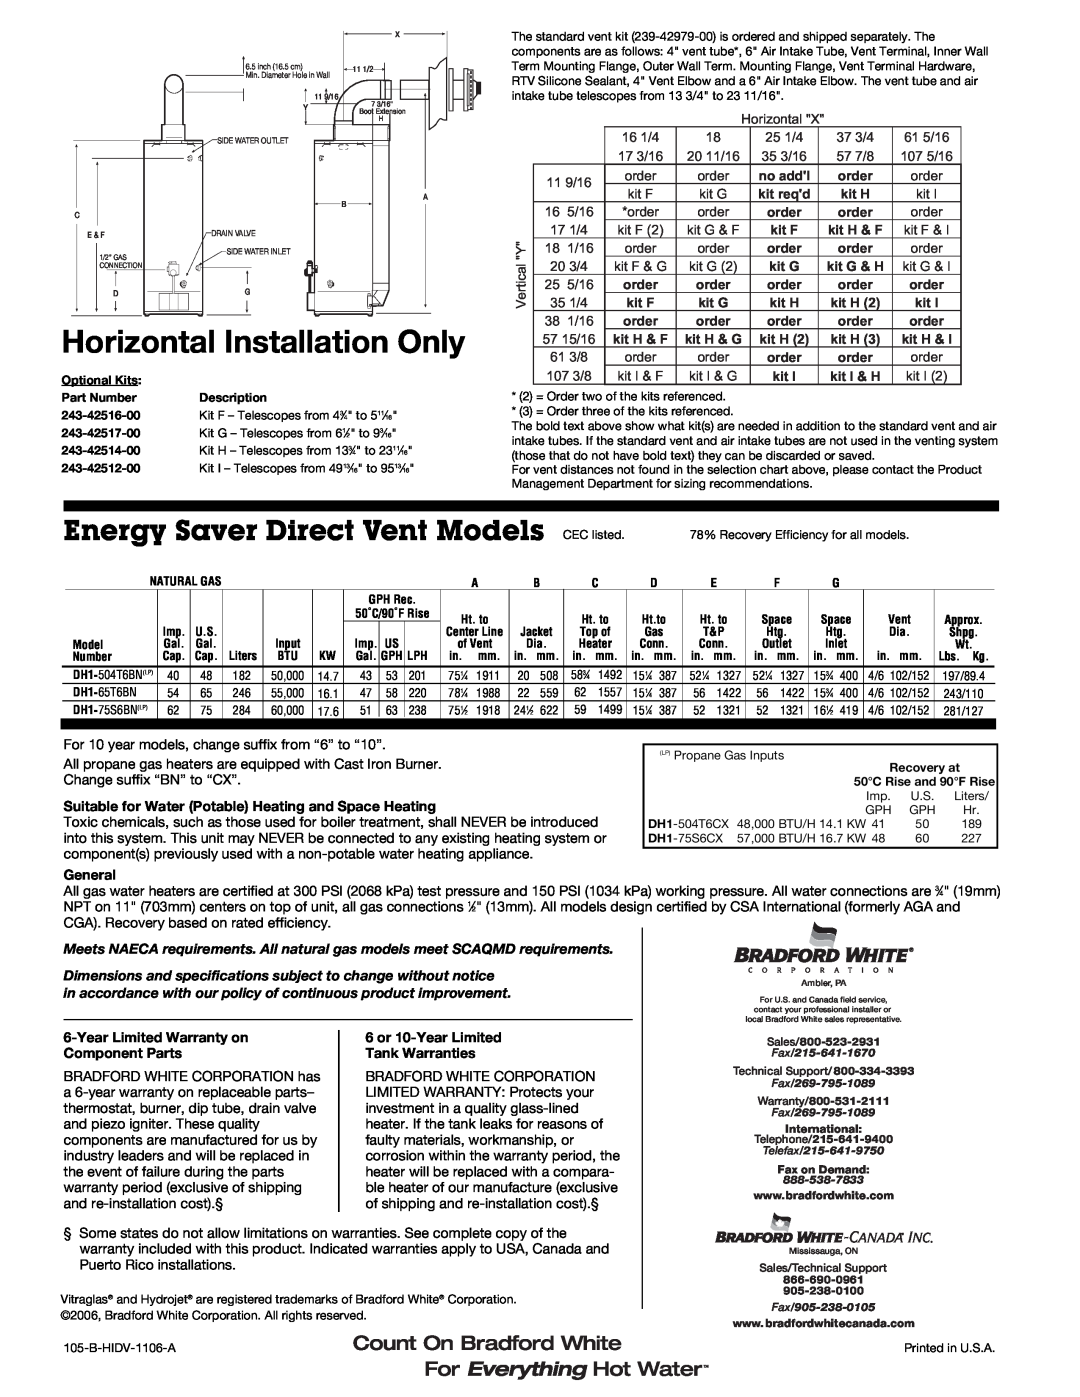 Bradford-White Corp 105-B warranty Horizontal Installation Only, Energy Saver Direct Vent Models, General 